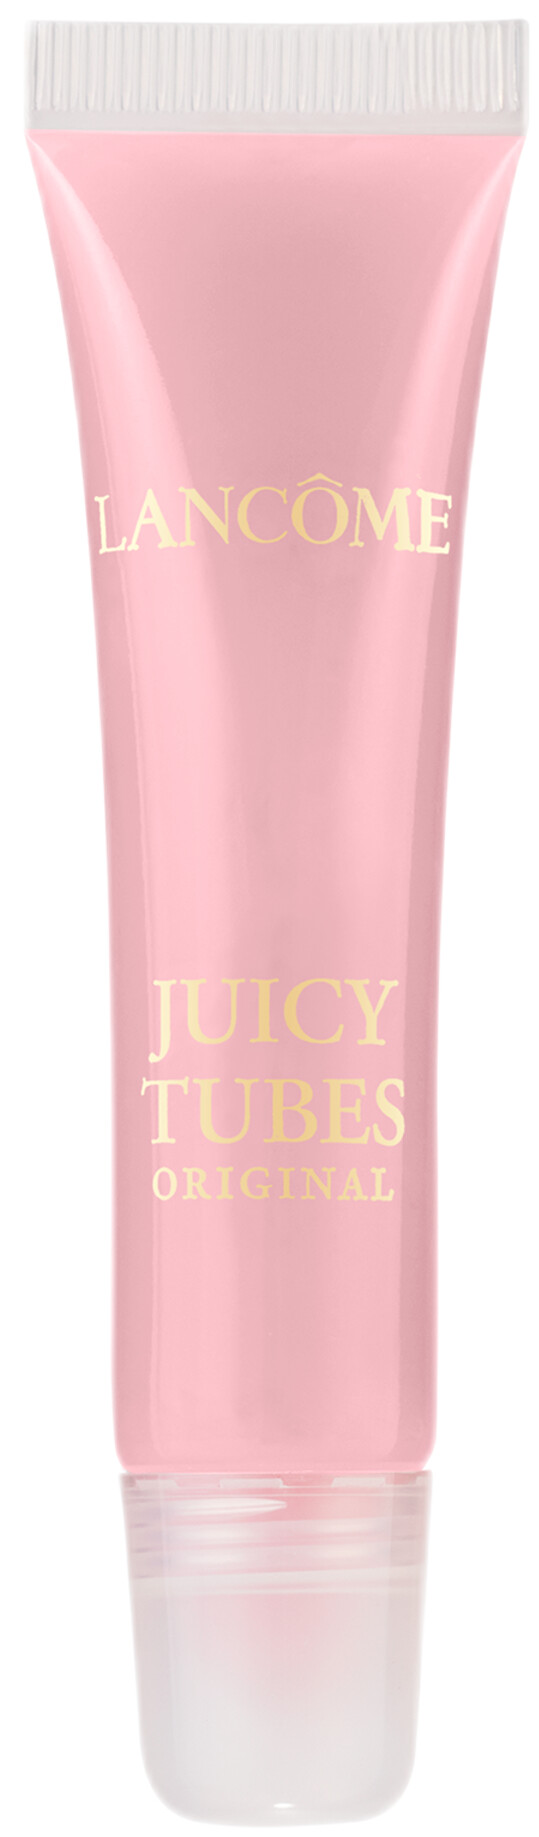 Lancome Juicy Tubes Ultra Shiny Lip Gloss 15ml 03 - Dreamsicle